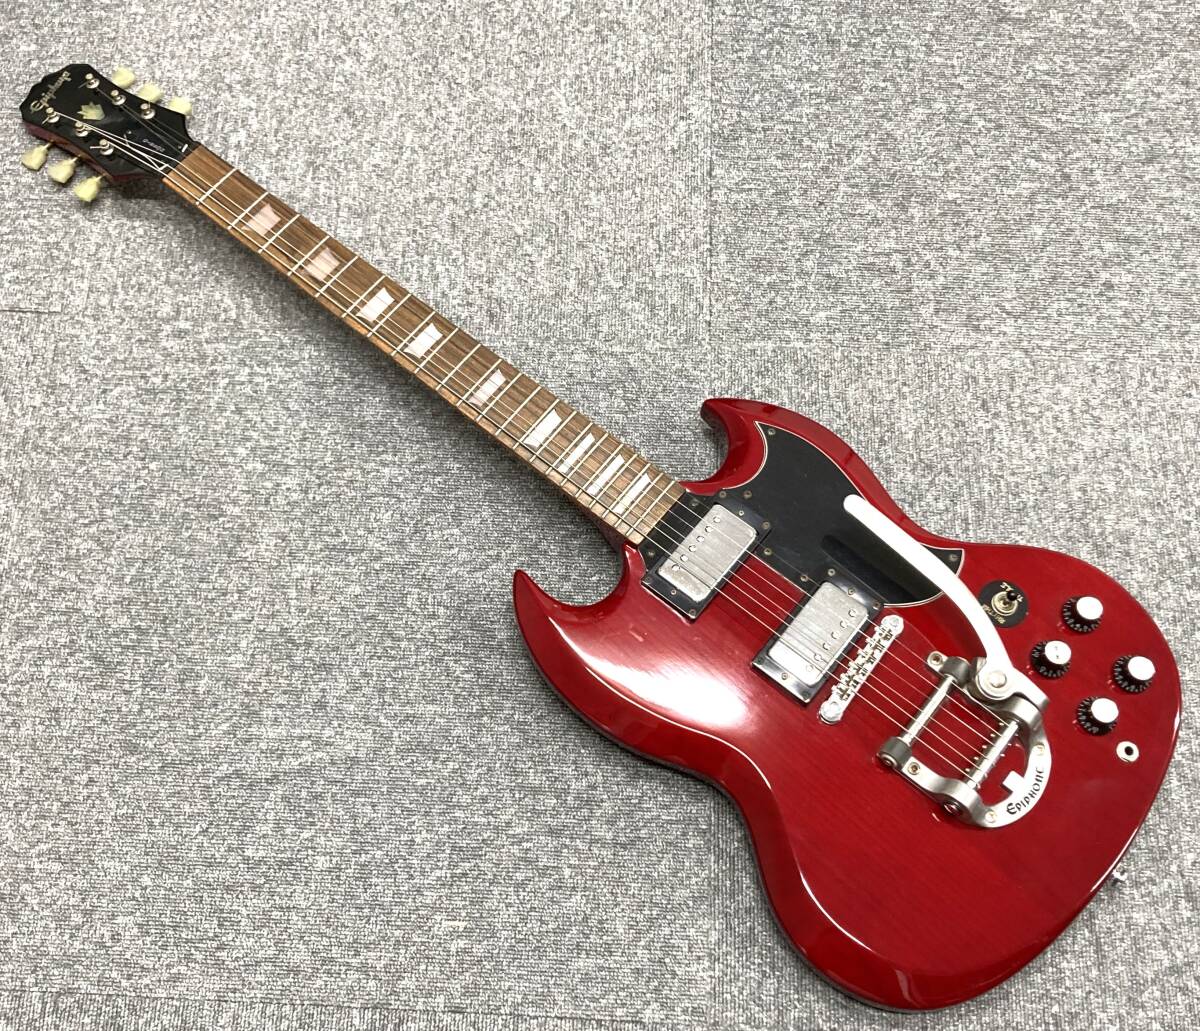 Epiphone Gibson エピフォン ギブソン エレキギター 赤 レッド 現状品 楽器